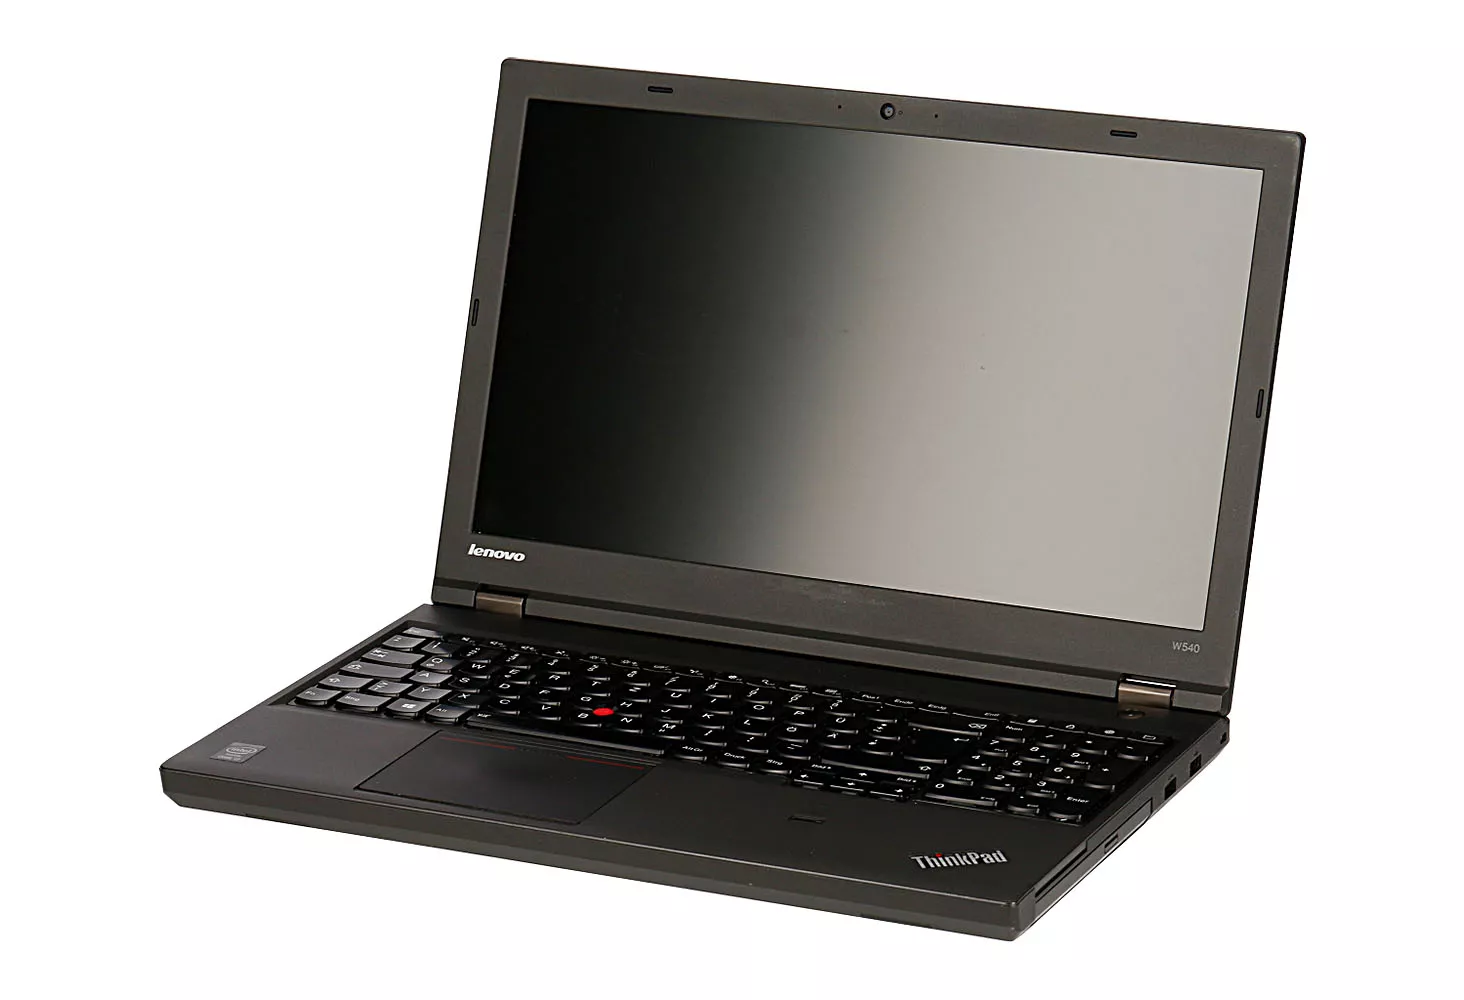 Lenovo ThinkPad W541 Quad Core i7 4810QM 2,8 GHz Webcam